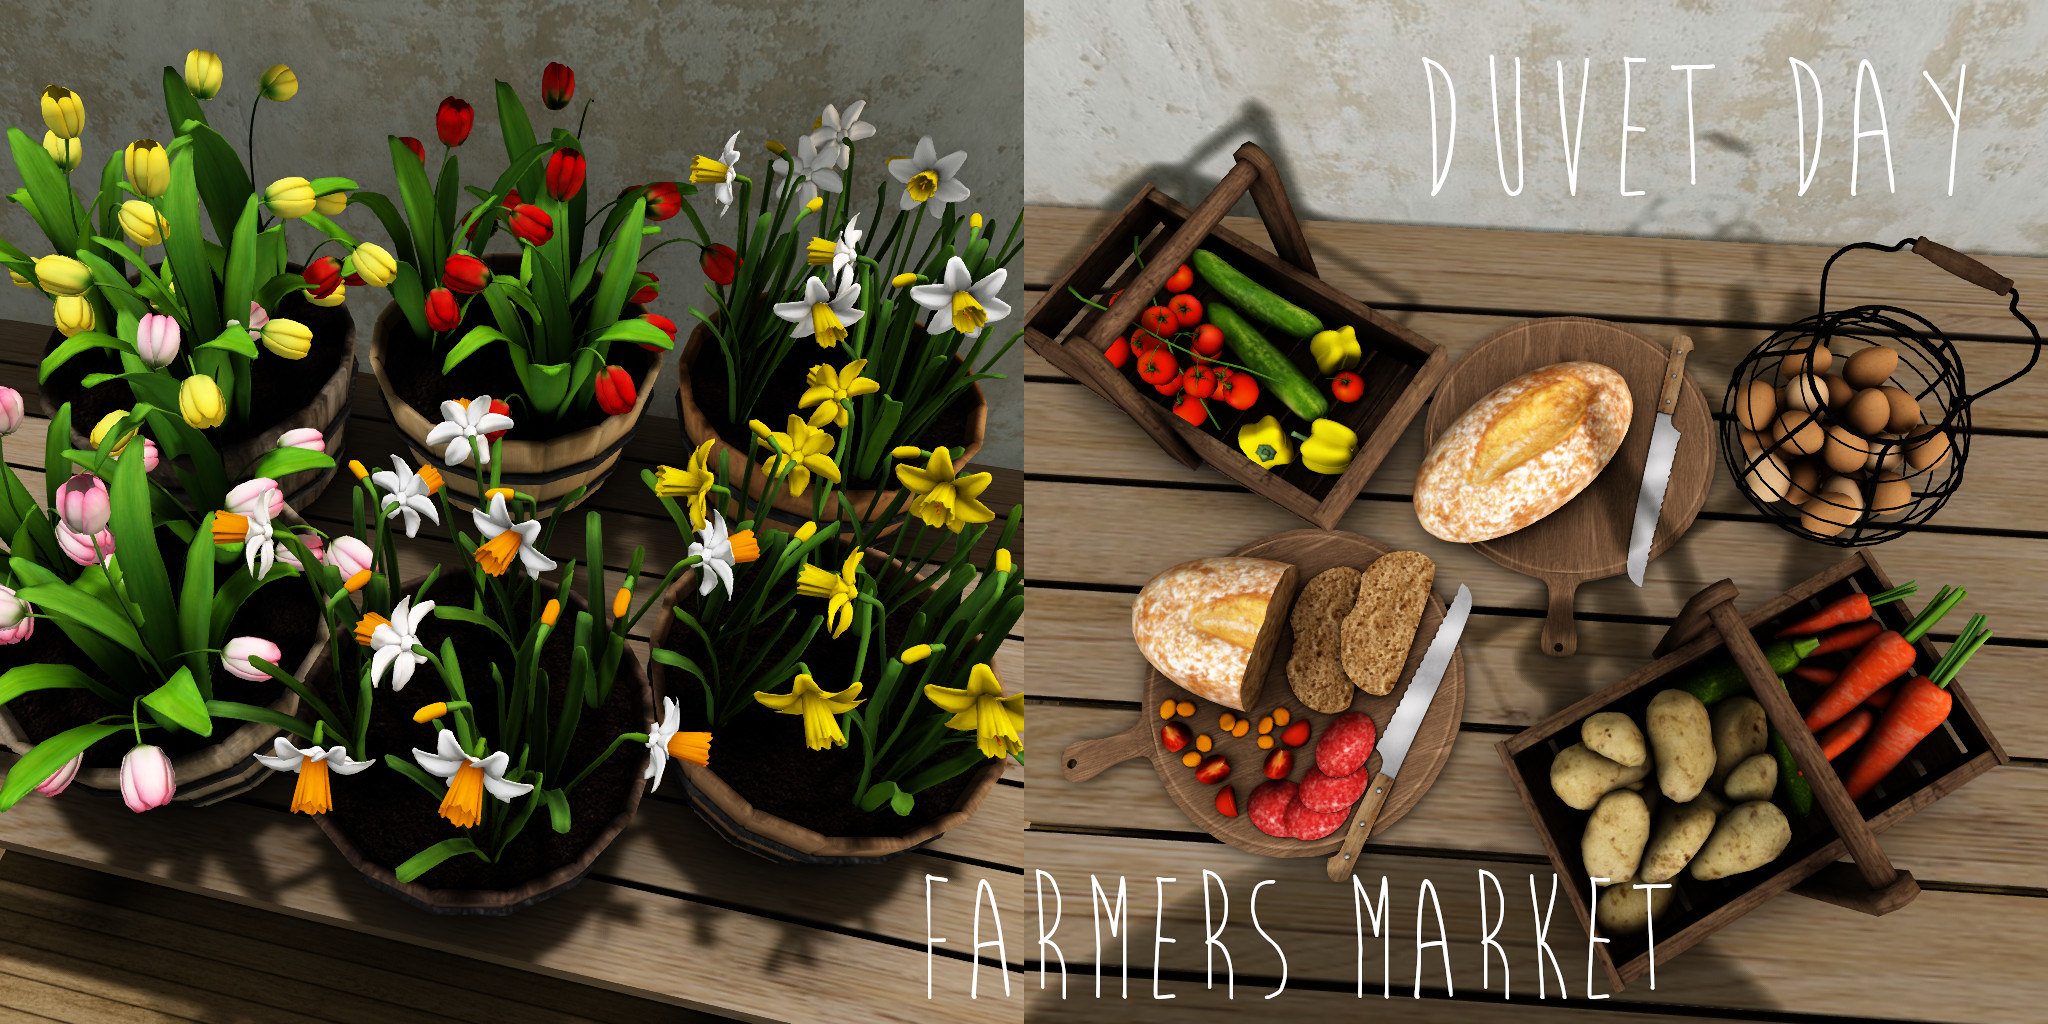 Duvet Day – Daffodils, Tulips, Food Boards, Vegetable Trugs & Egg Basket